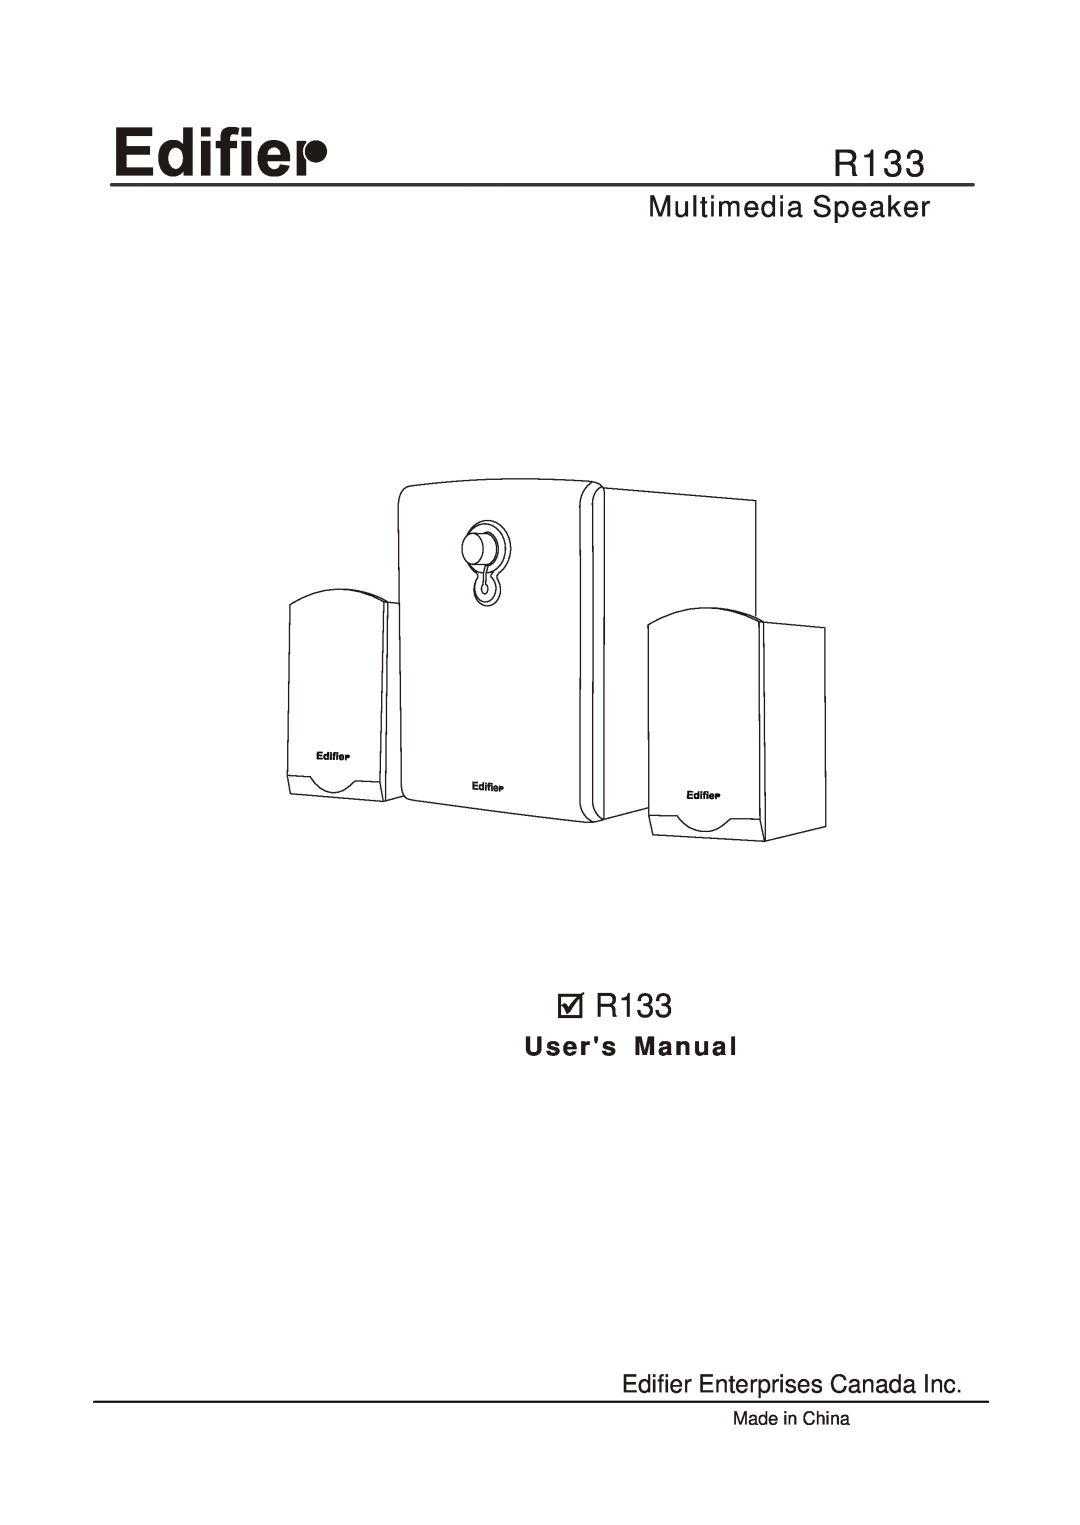 Edifier Enterprises Canada R133 user manual Made in China, Multimedia Speaker, U s e rs Manual 